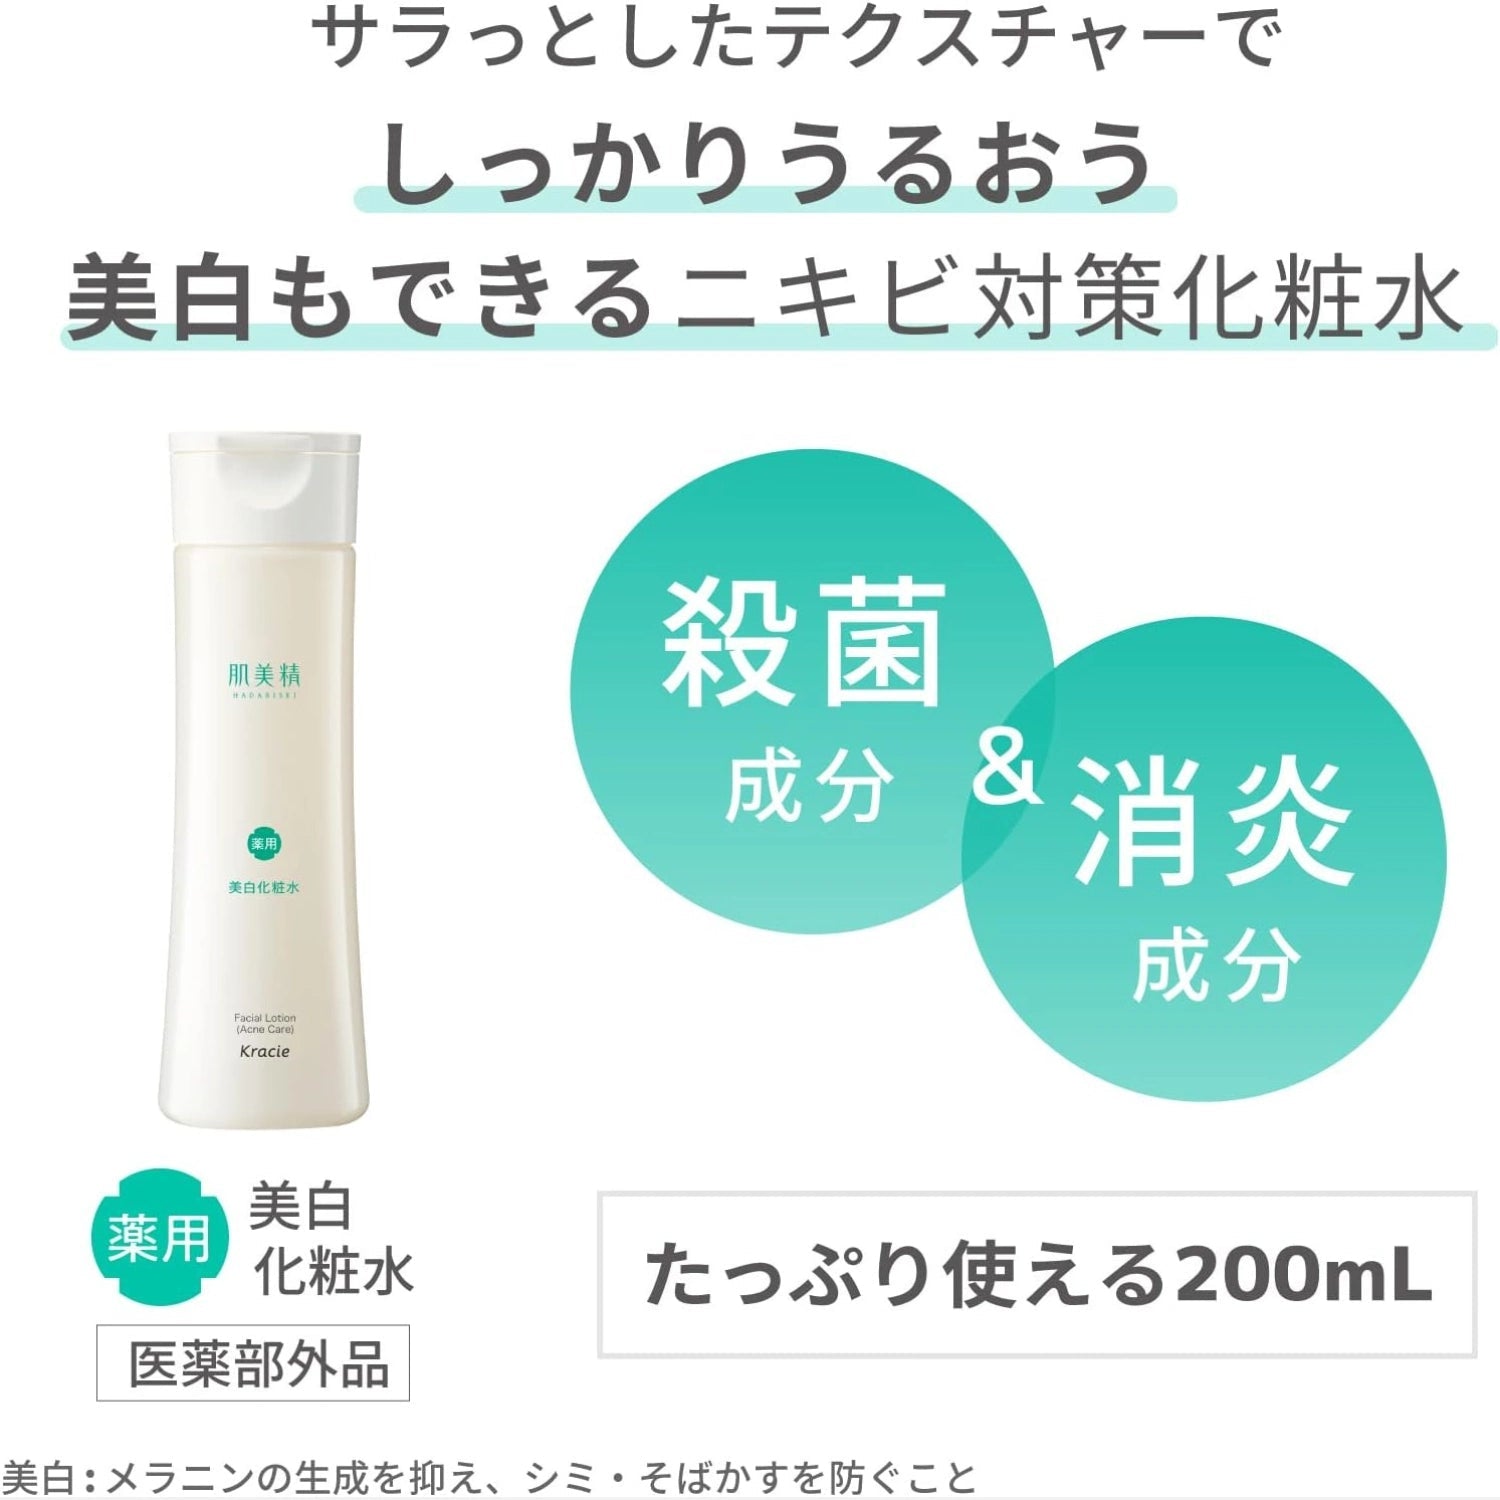 Hadabisei Medicated Facial Lotion Acne Care 200ml - Buy Me Japan